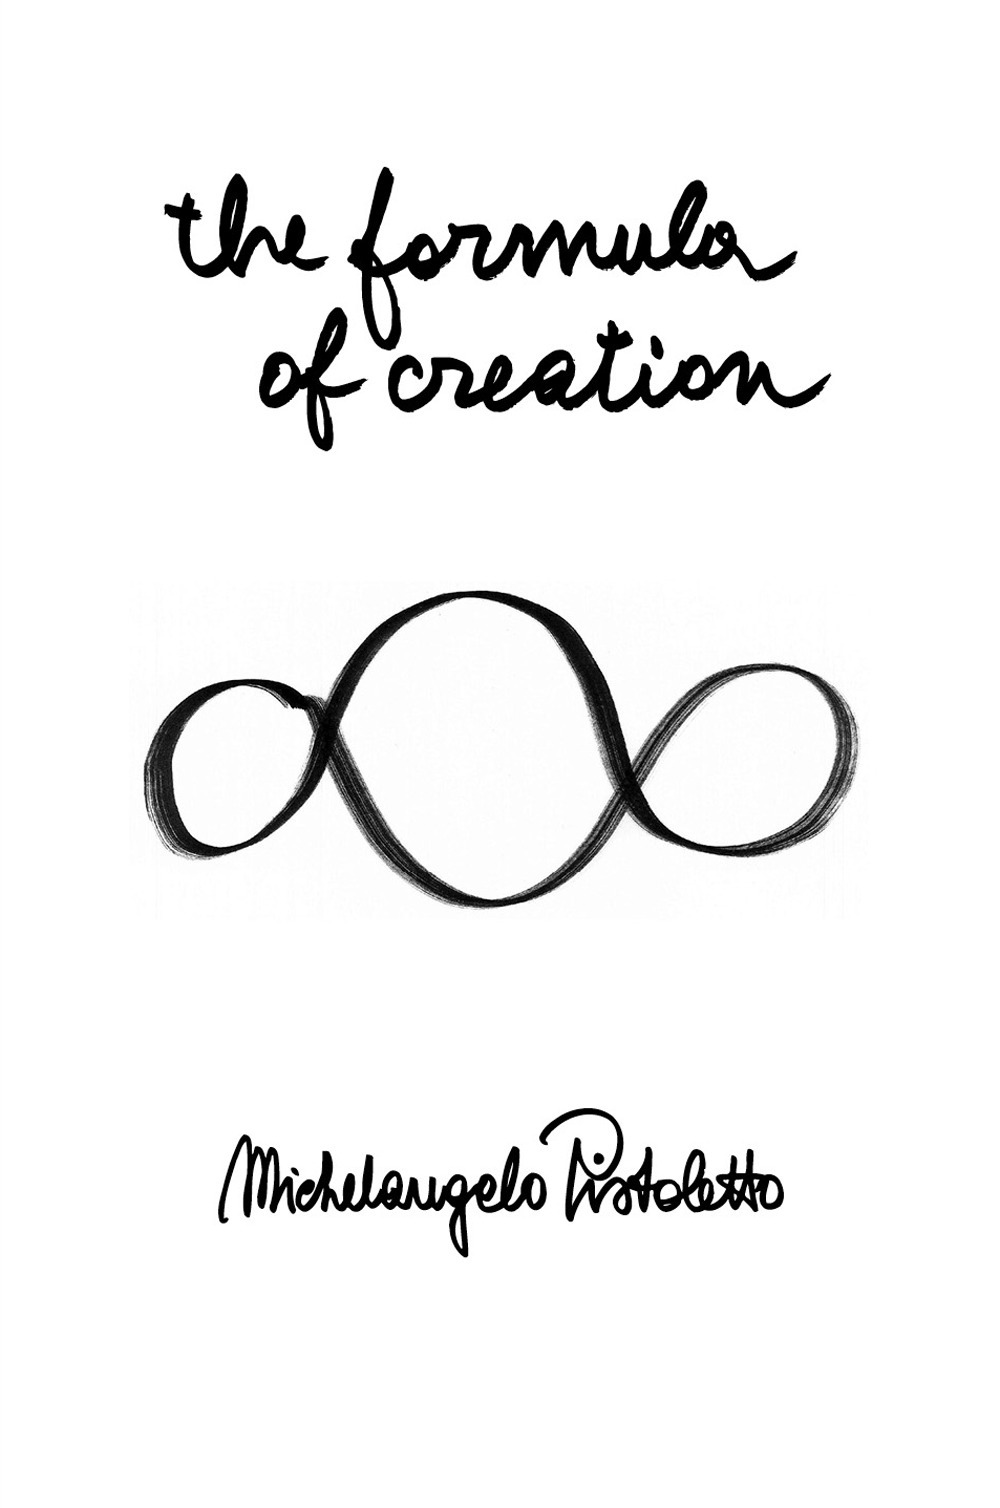 The formula of creation